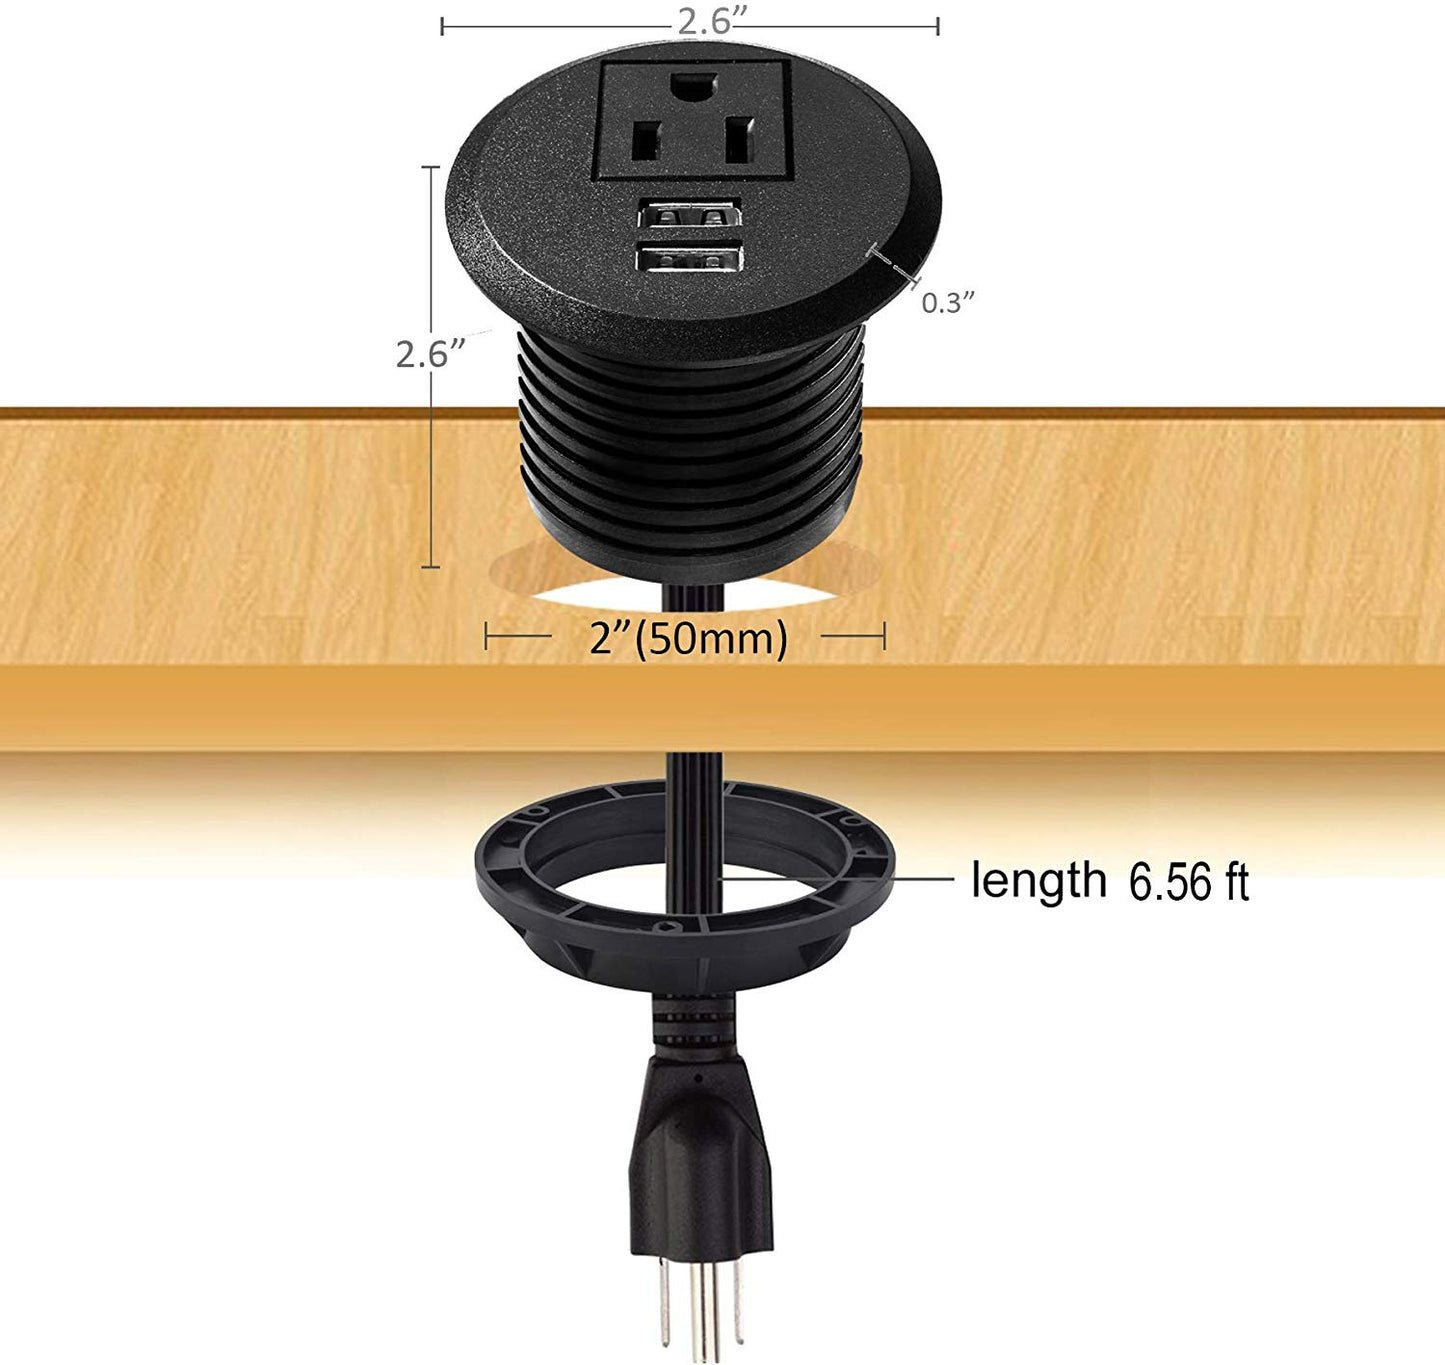 Desk Grommet Power Outlet with USB Port